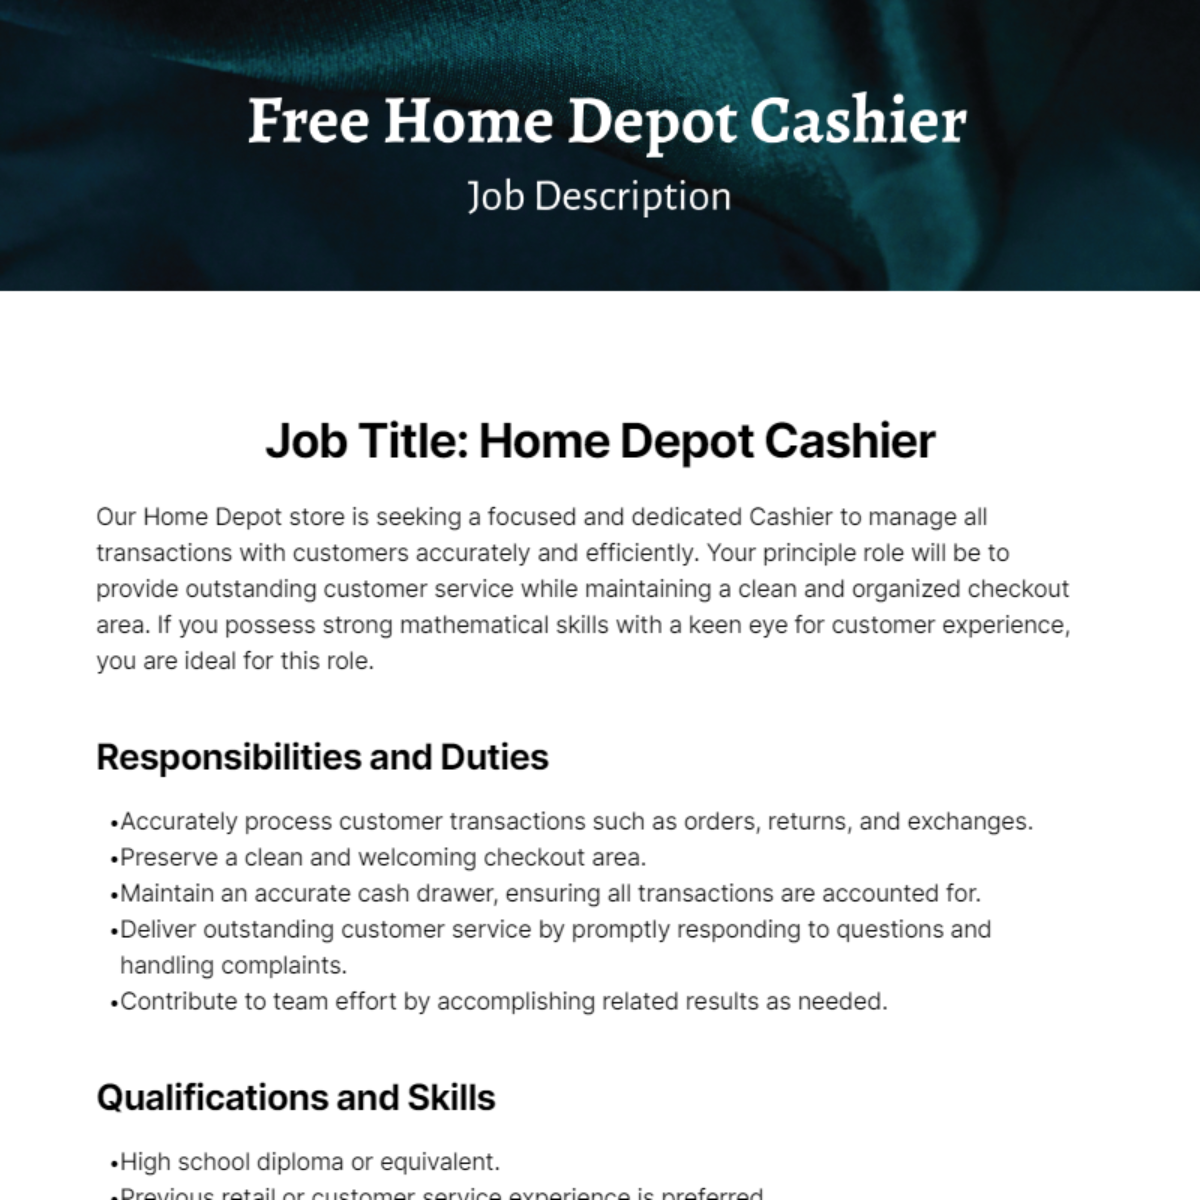 Free Home Depot Cashier Job Description Template